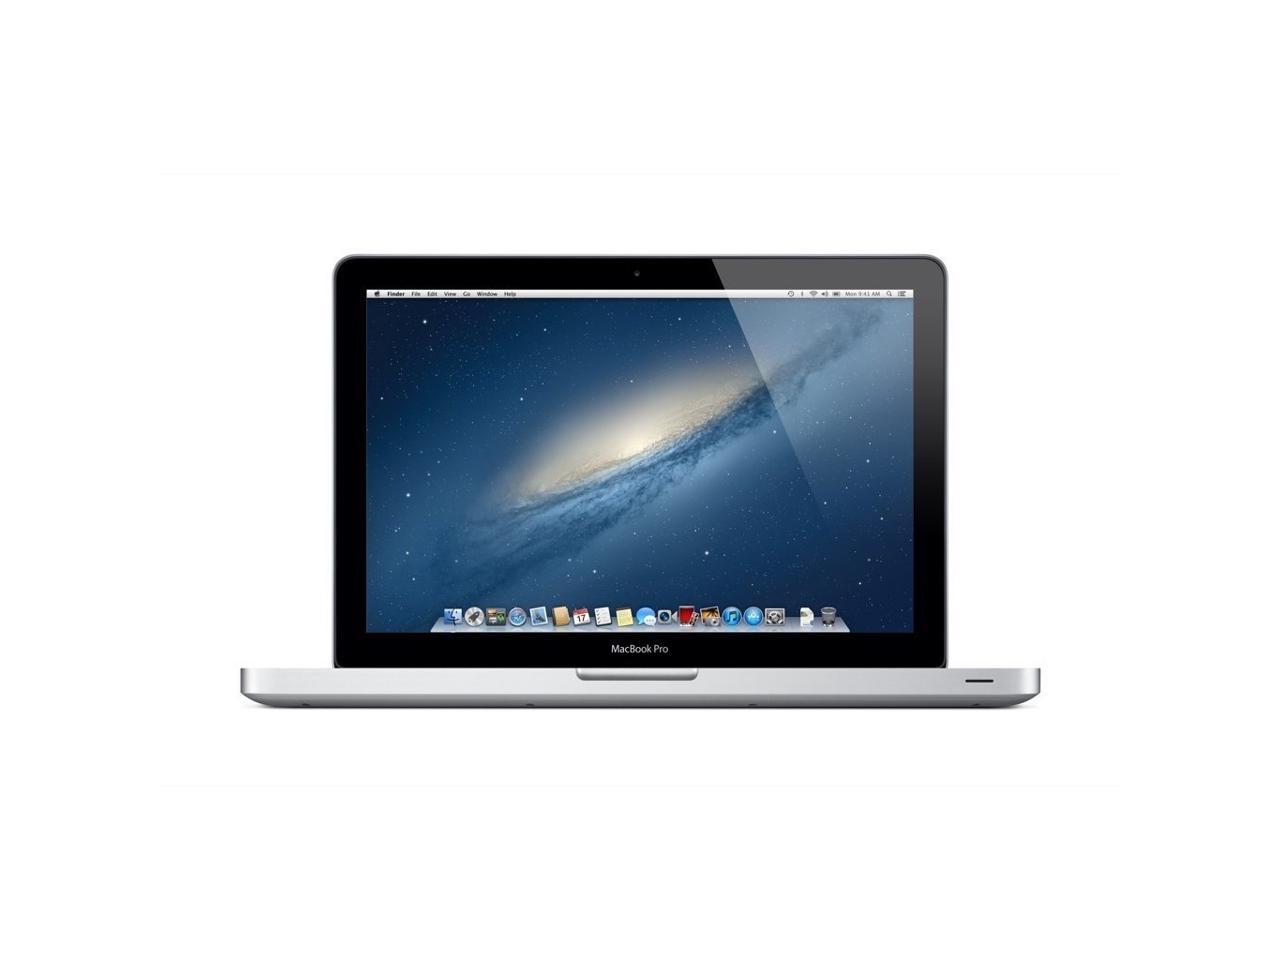 apple macbook pro mb990ll/a 13.3 inch laptop refurbished